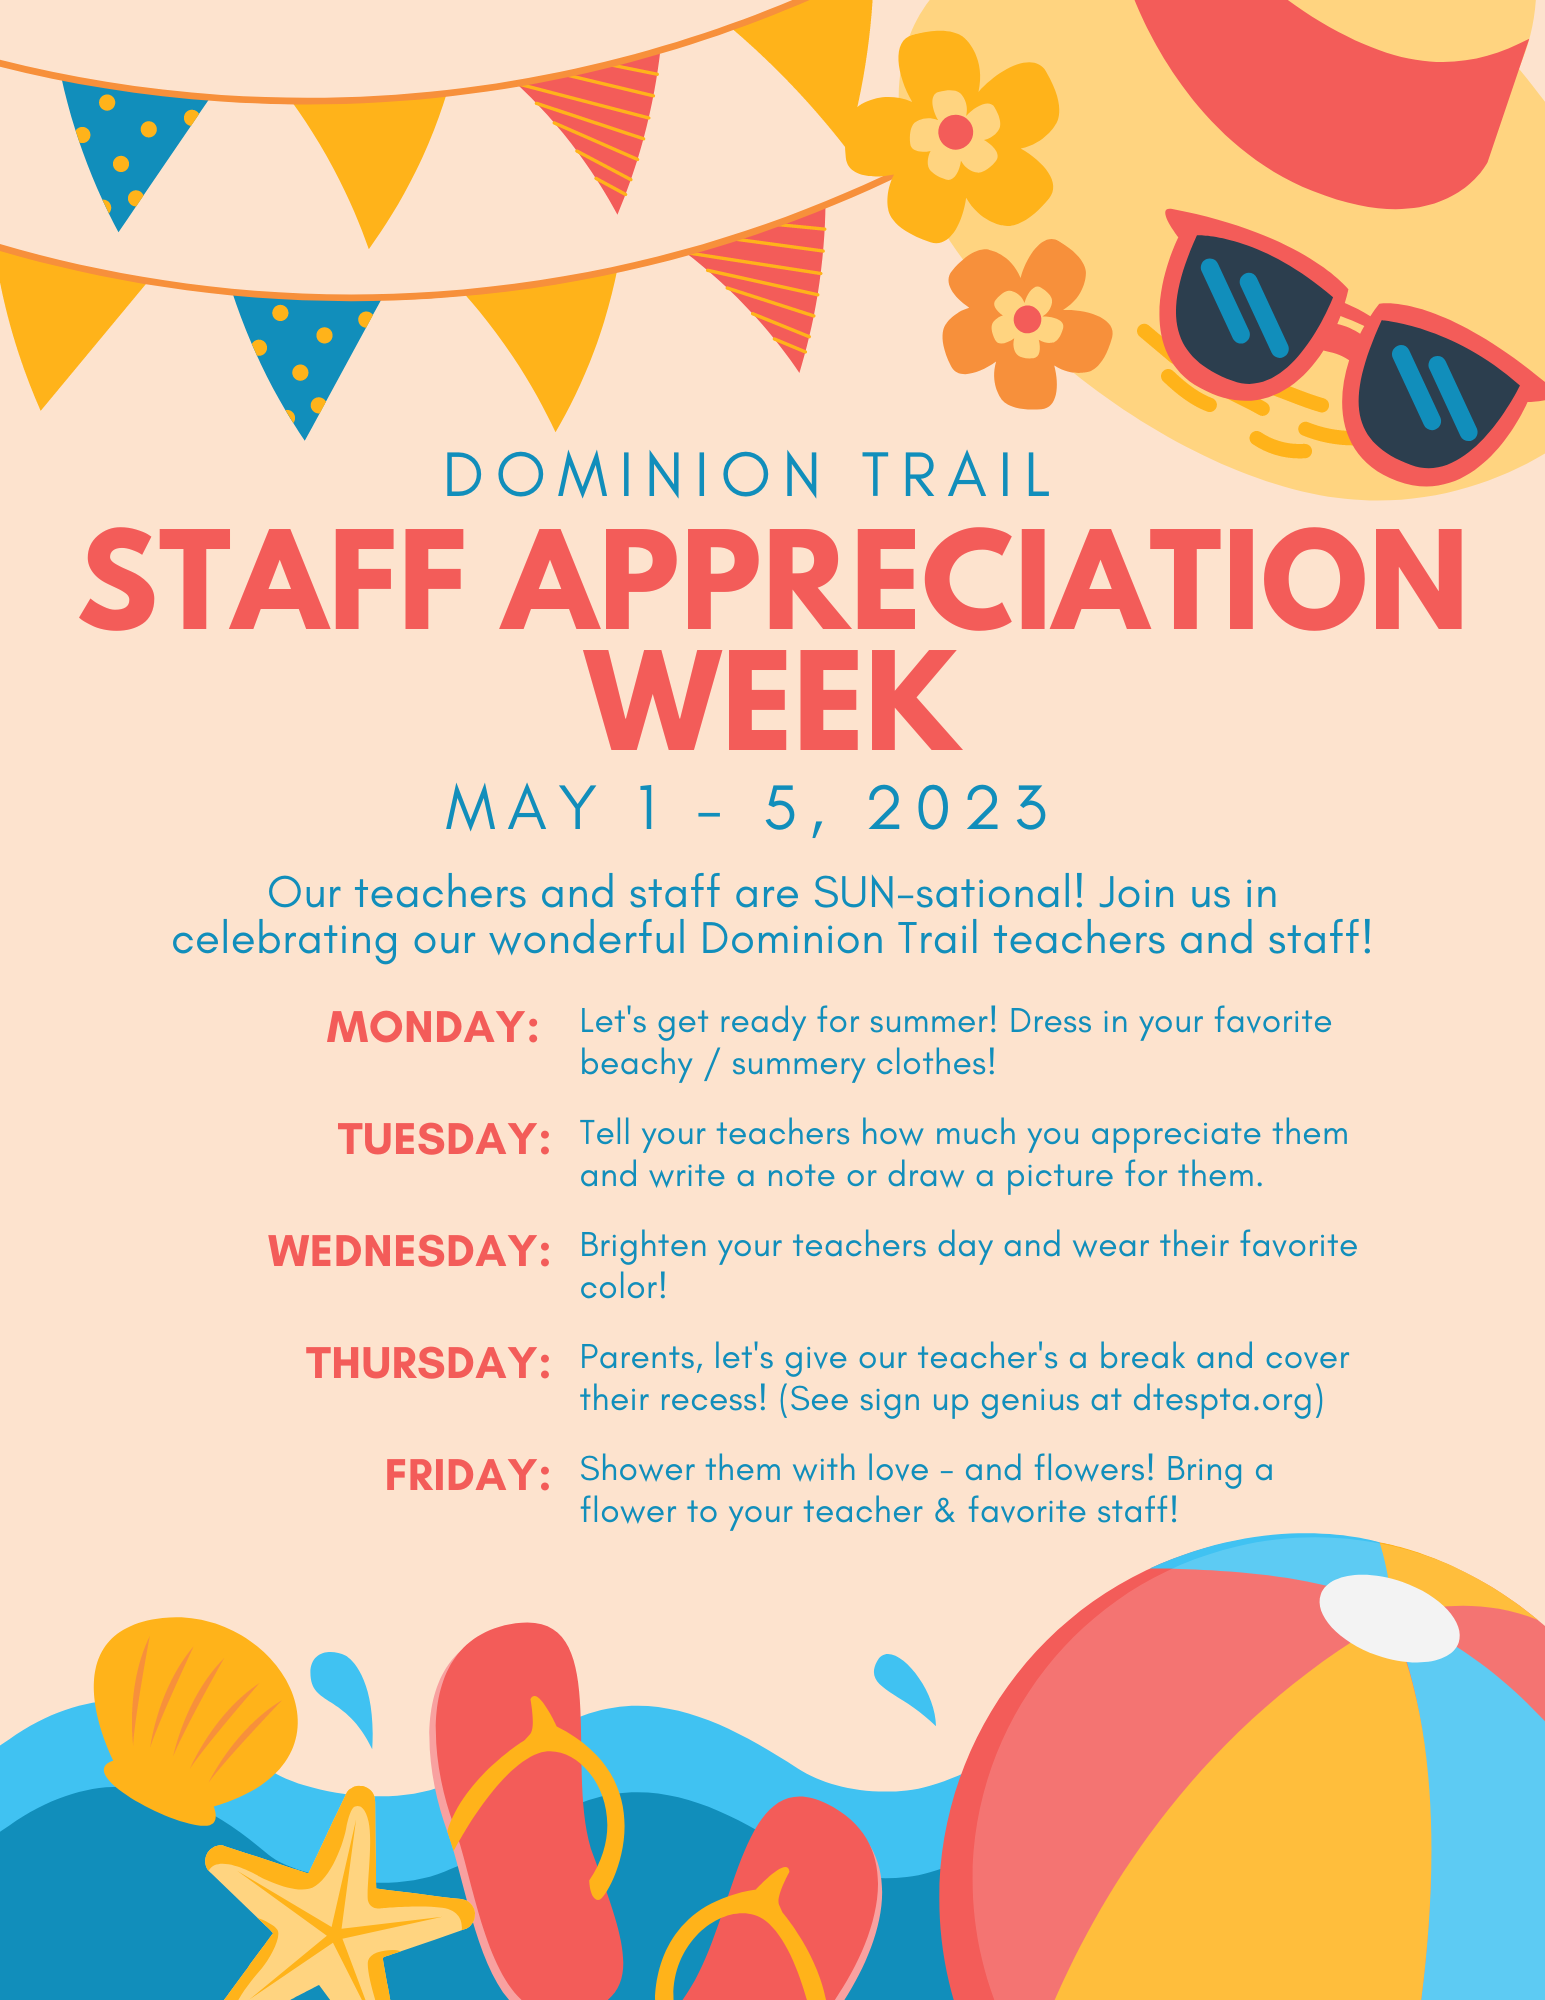 Staff Appreciation Week is NEXT WEEK!